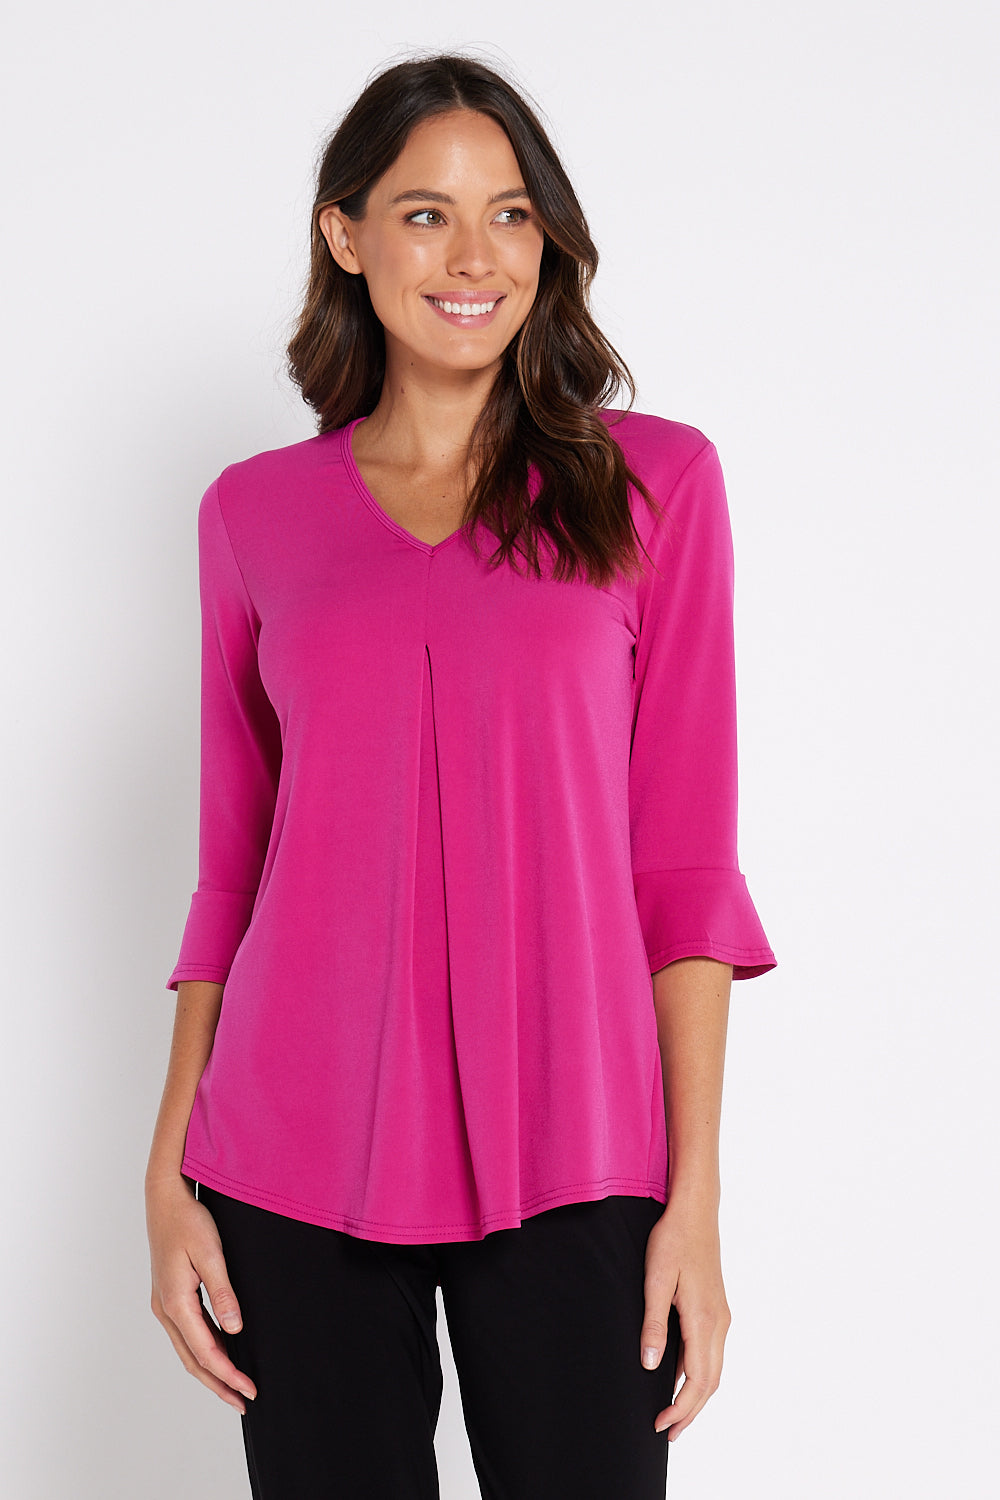 Keswick Top - Hot Pink – TULIO Fashion